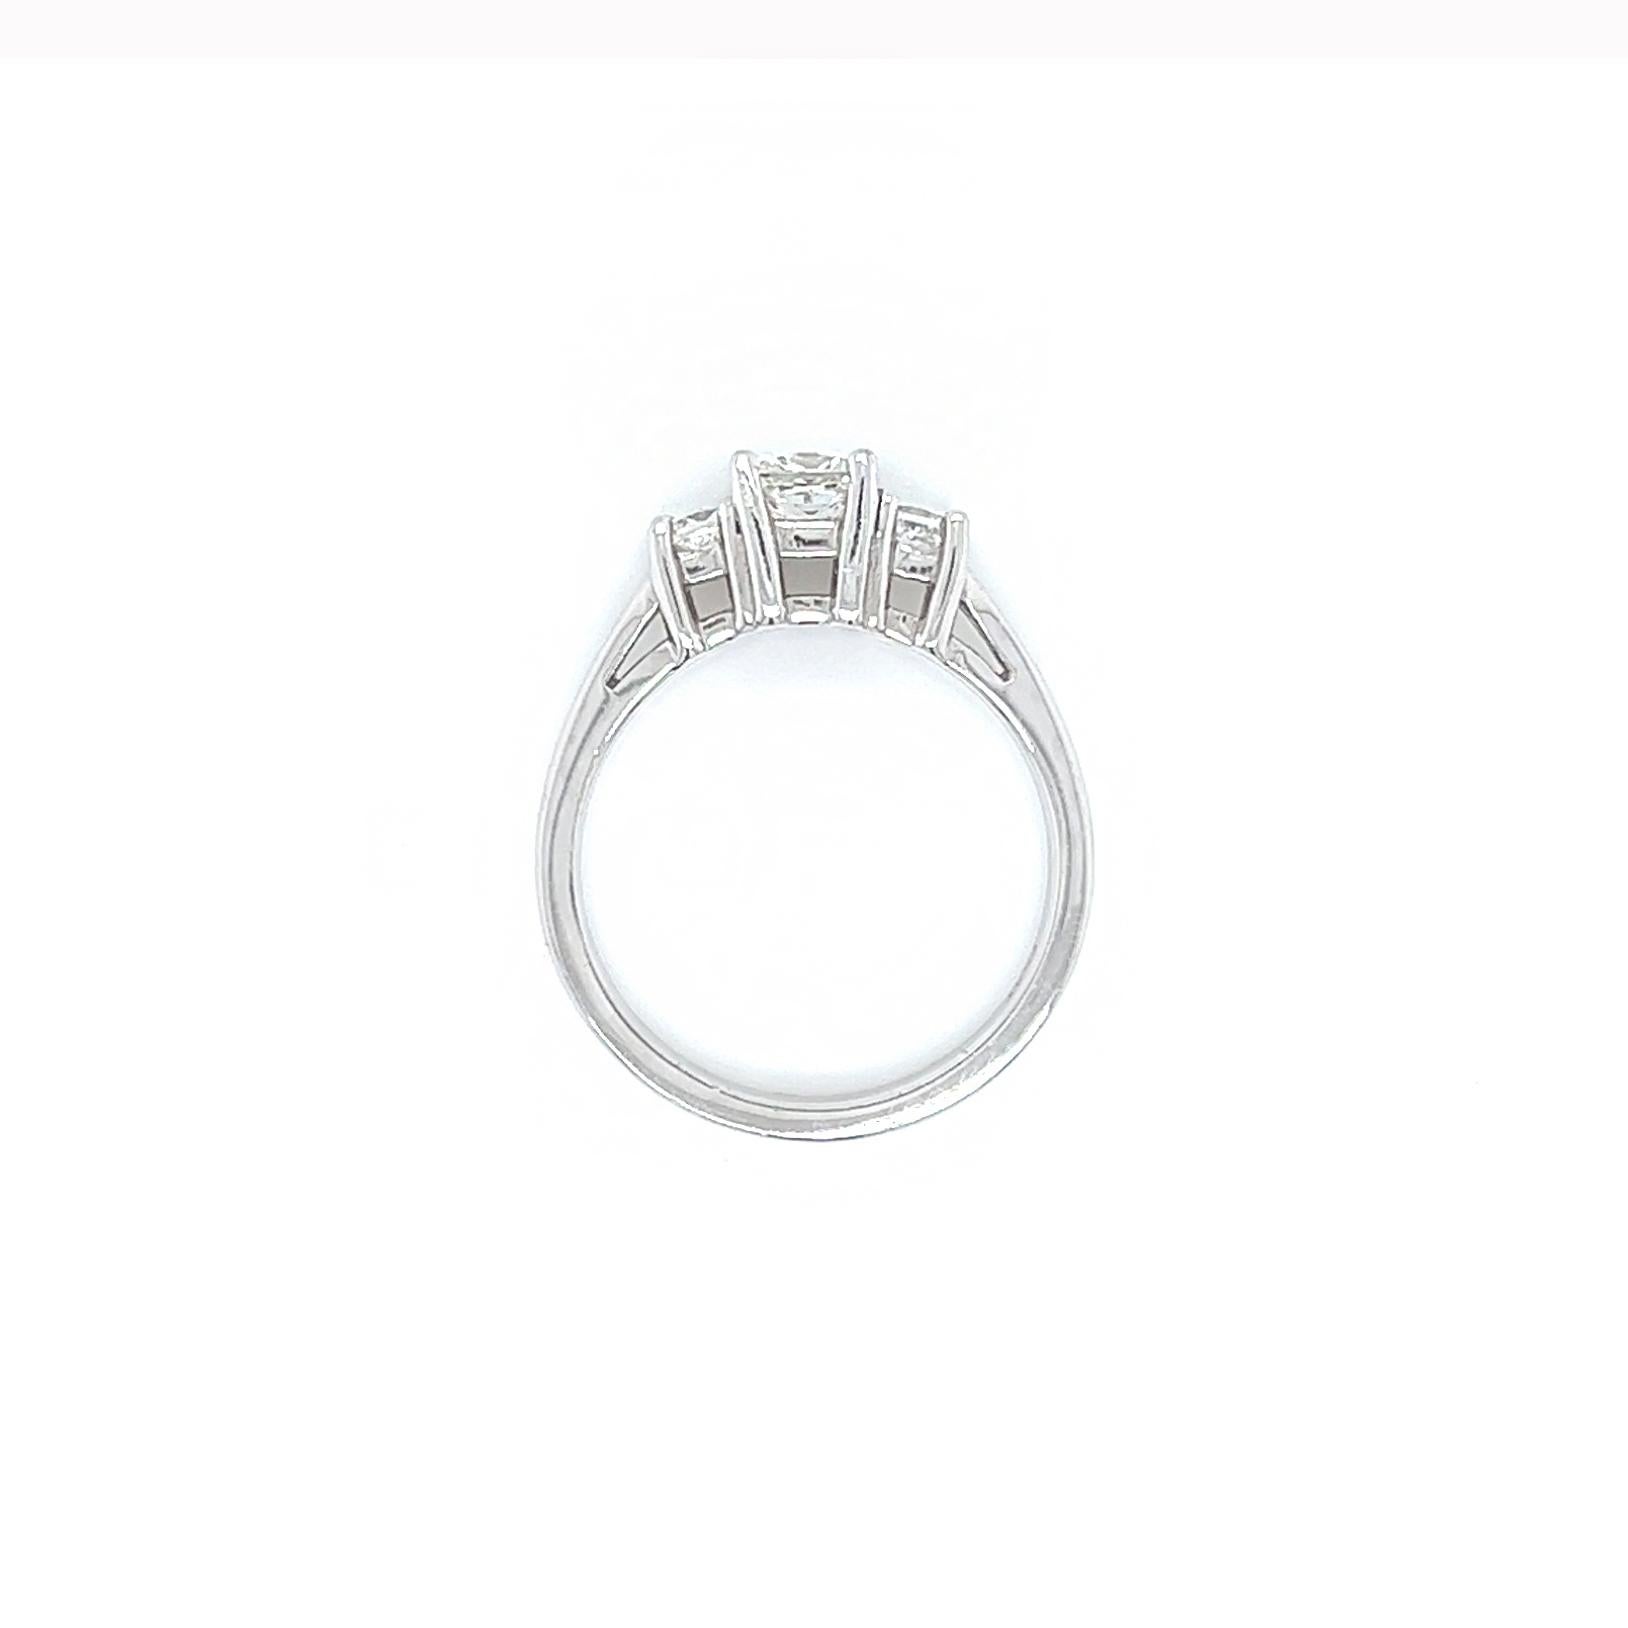 Beautiful Three Stone Diamond Ring in Platinum Band

-1.01 Carat Total Round Diamonds

-Center Diamond: 0.56Carat 

-2 Side Stones: 0.45Carat Total

- F-G Color, VS Clarity

-Metal: Platinum

-Ring Size: 6.5